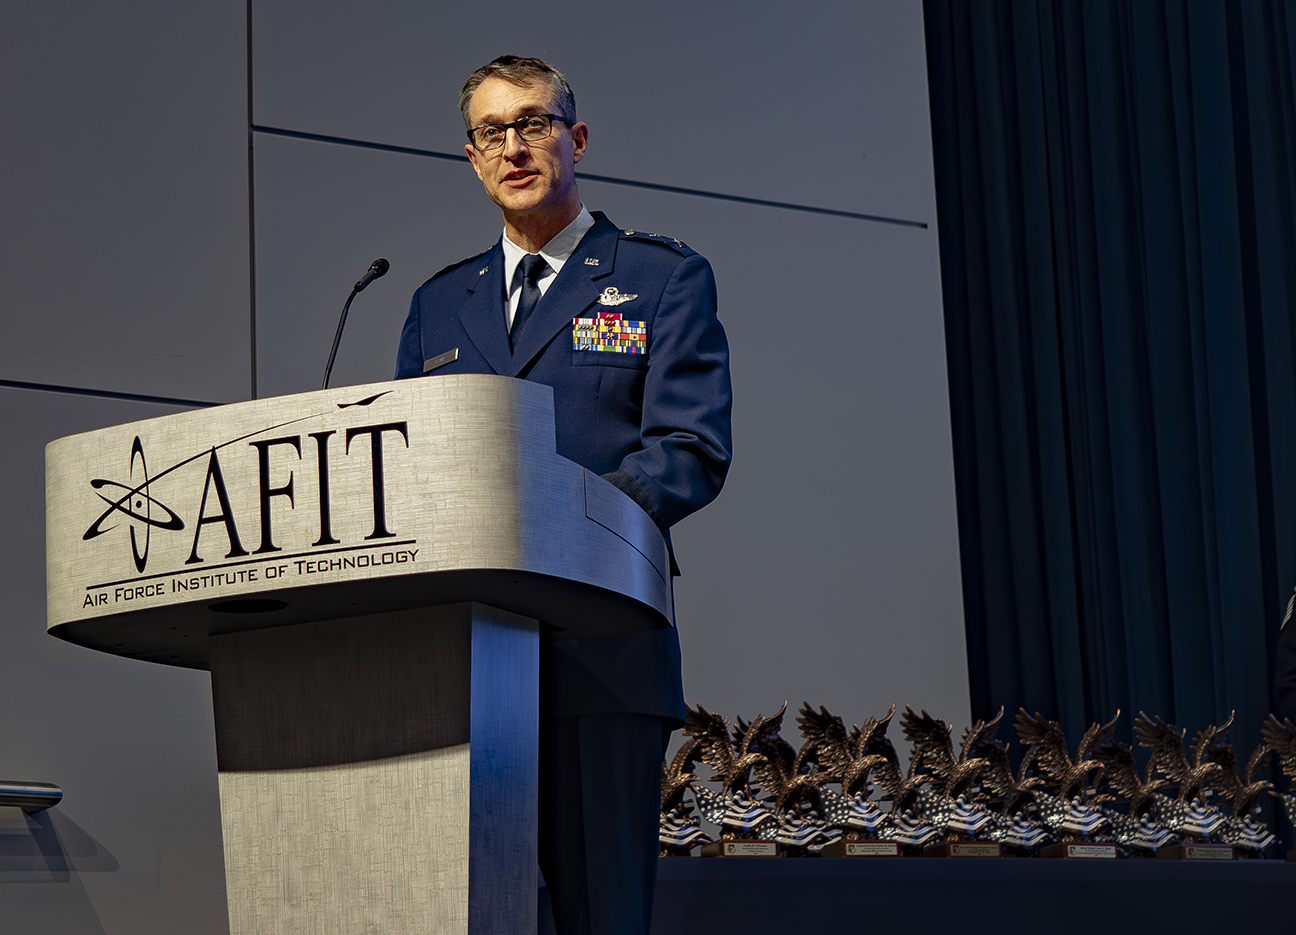 AFRL Commander giving opening remarks